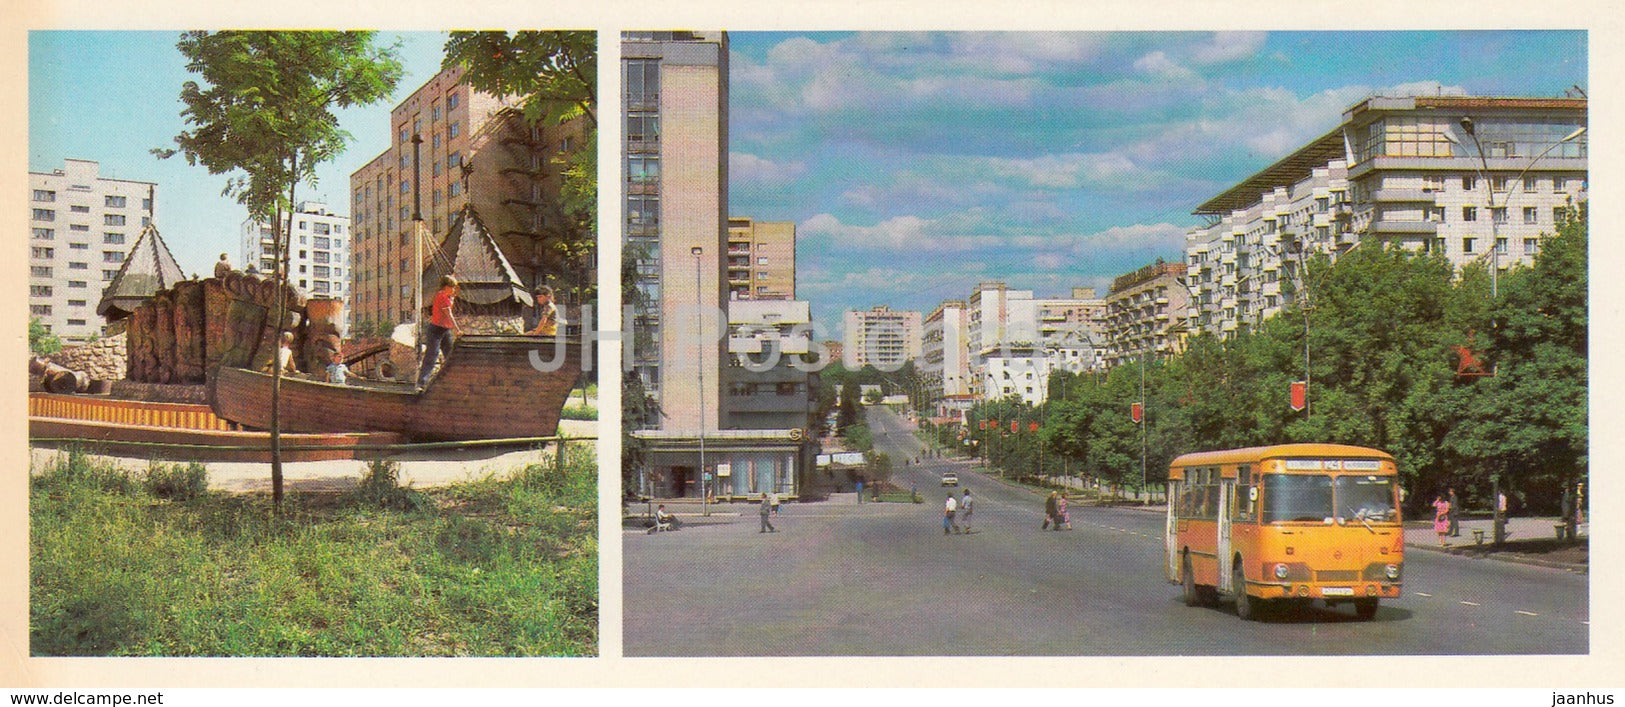 Samara - Children Playground - Molodogvardeyskaya street - bus - Kuybyshev - 1985 - Russia USSR - unused - JH Postcards